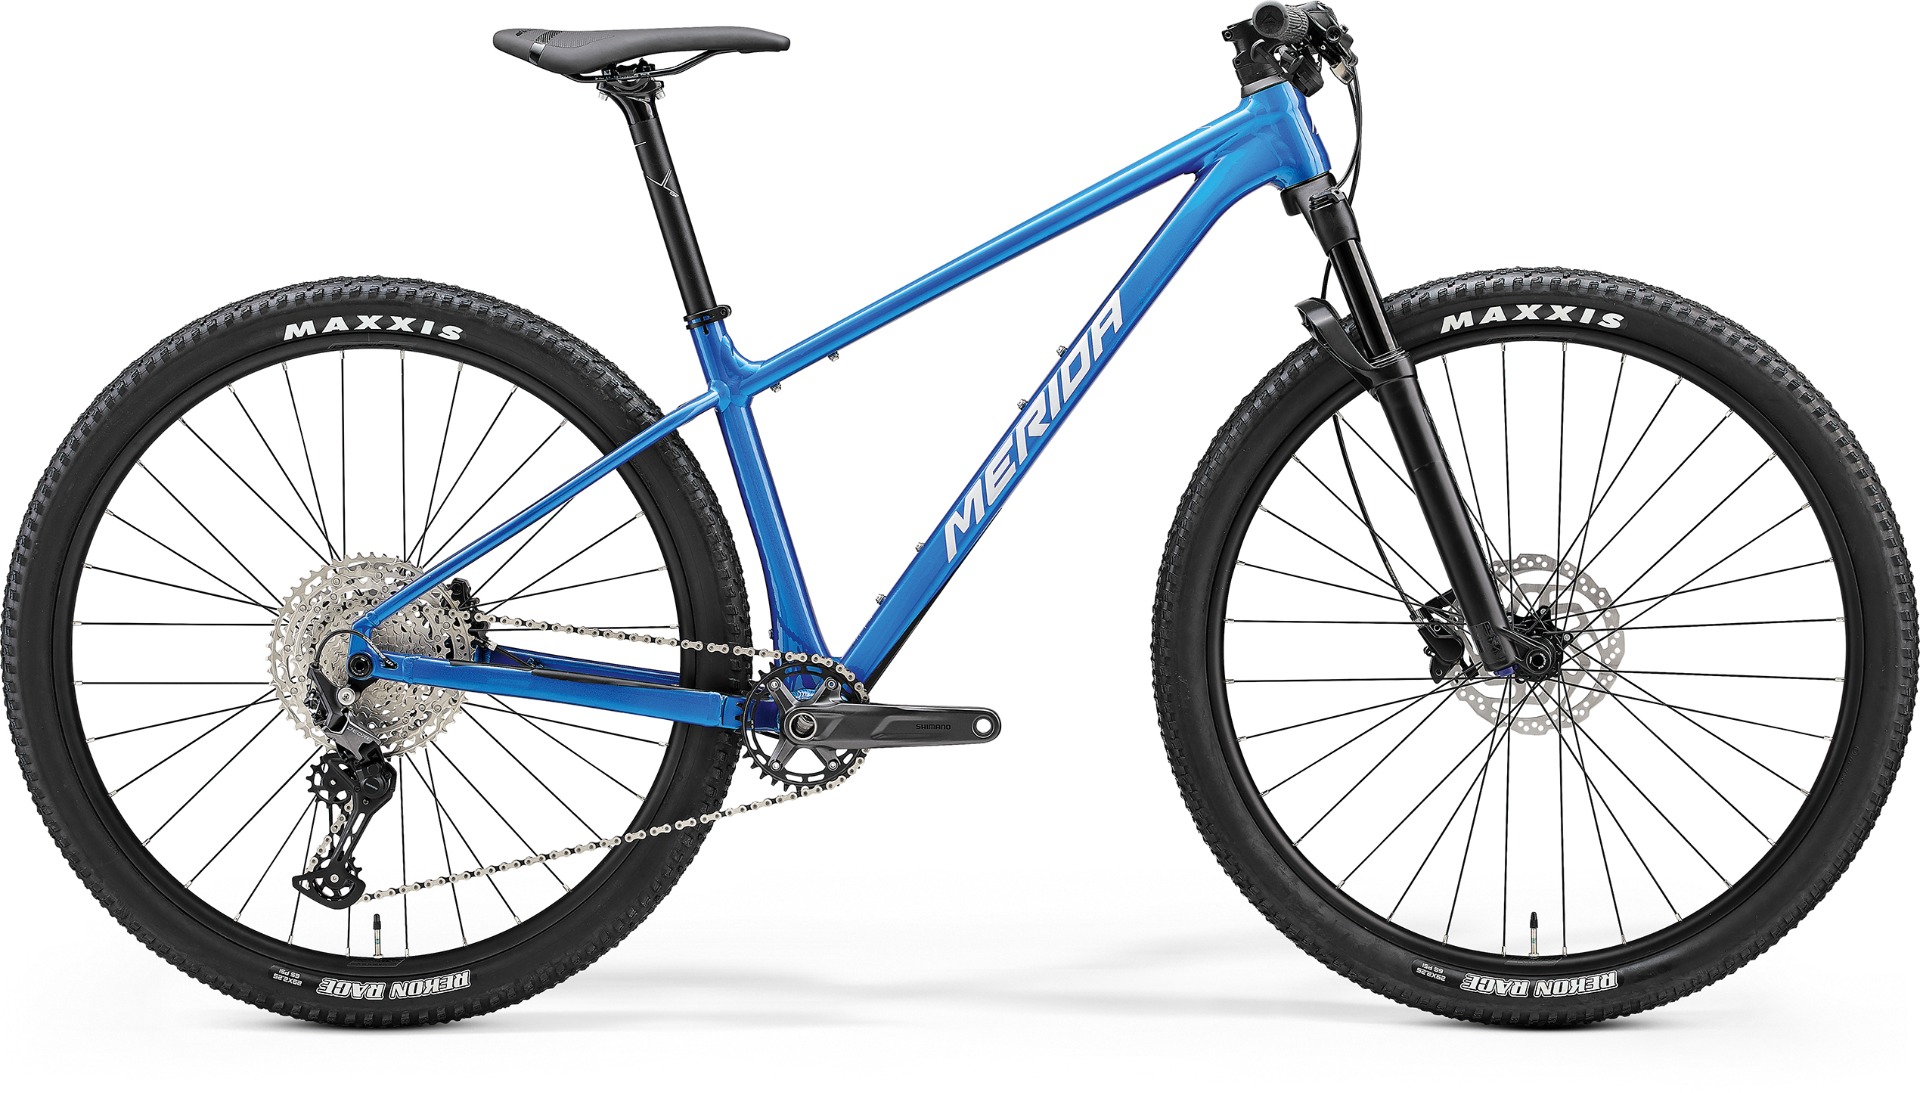 Bicycle Merida BIG.NINE 700 III1 LIGHT BLUE(SILVER)